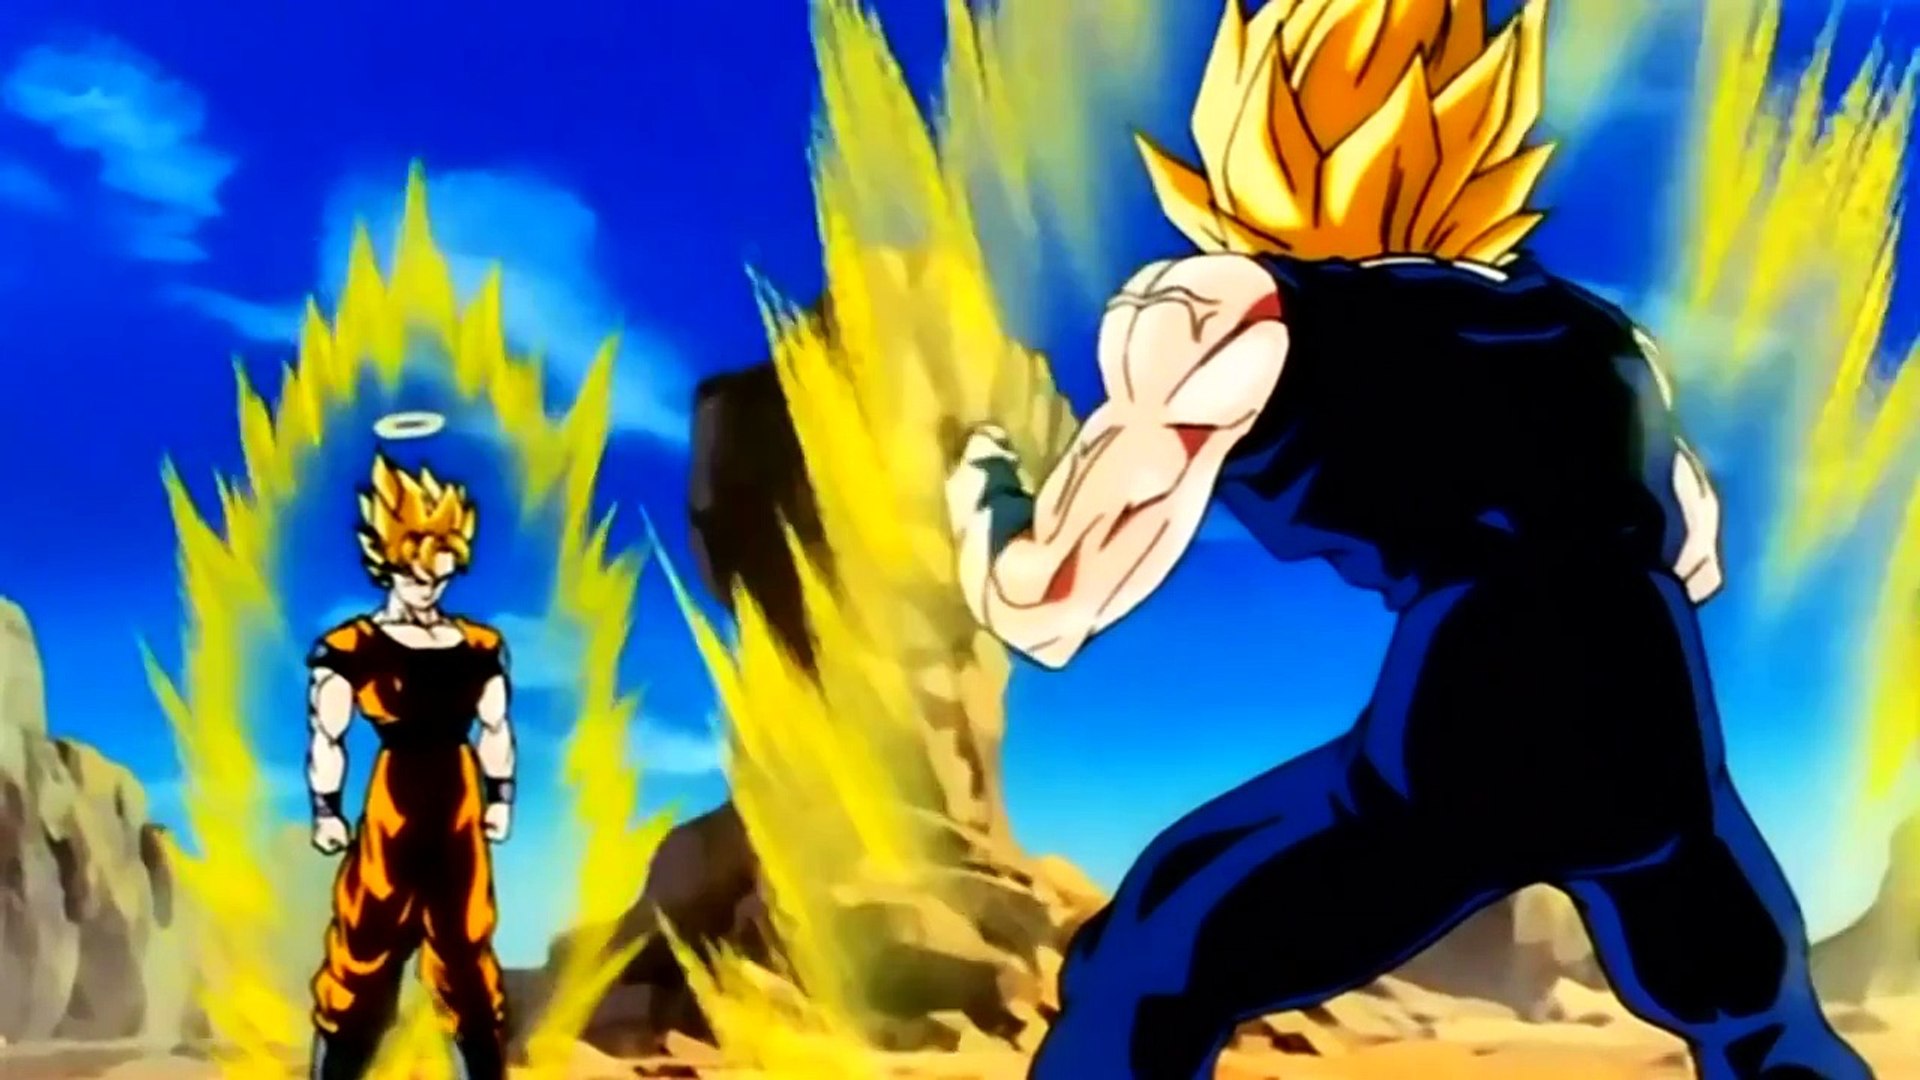 SSJ2 Majin Vegeta vs SSJ2 Goku, Goku vs Majin Vegeta, By Heroes Battle  Clip